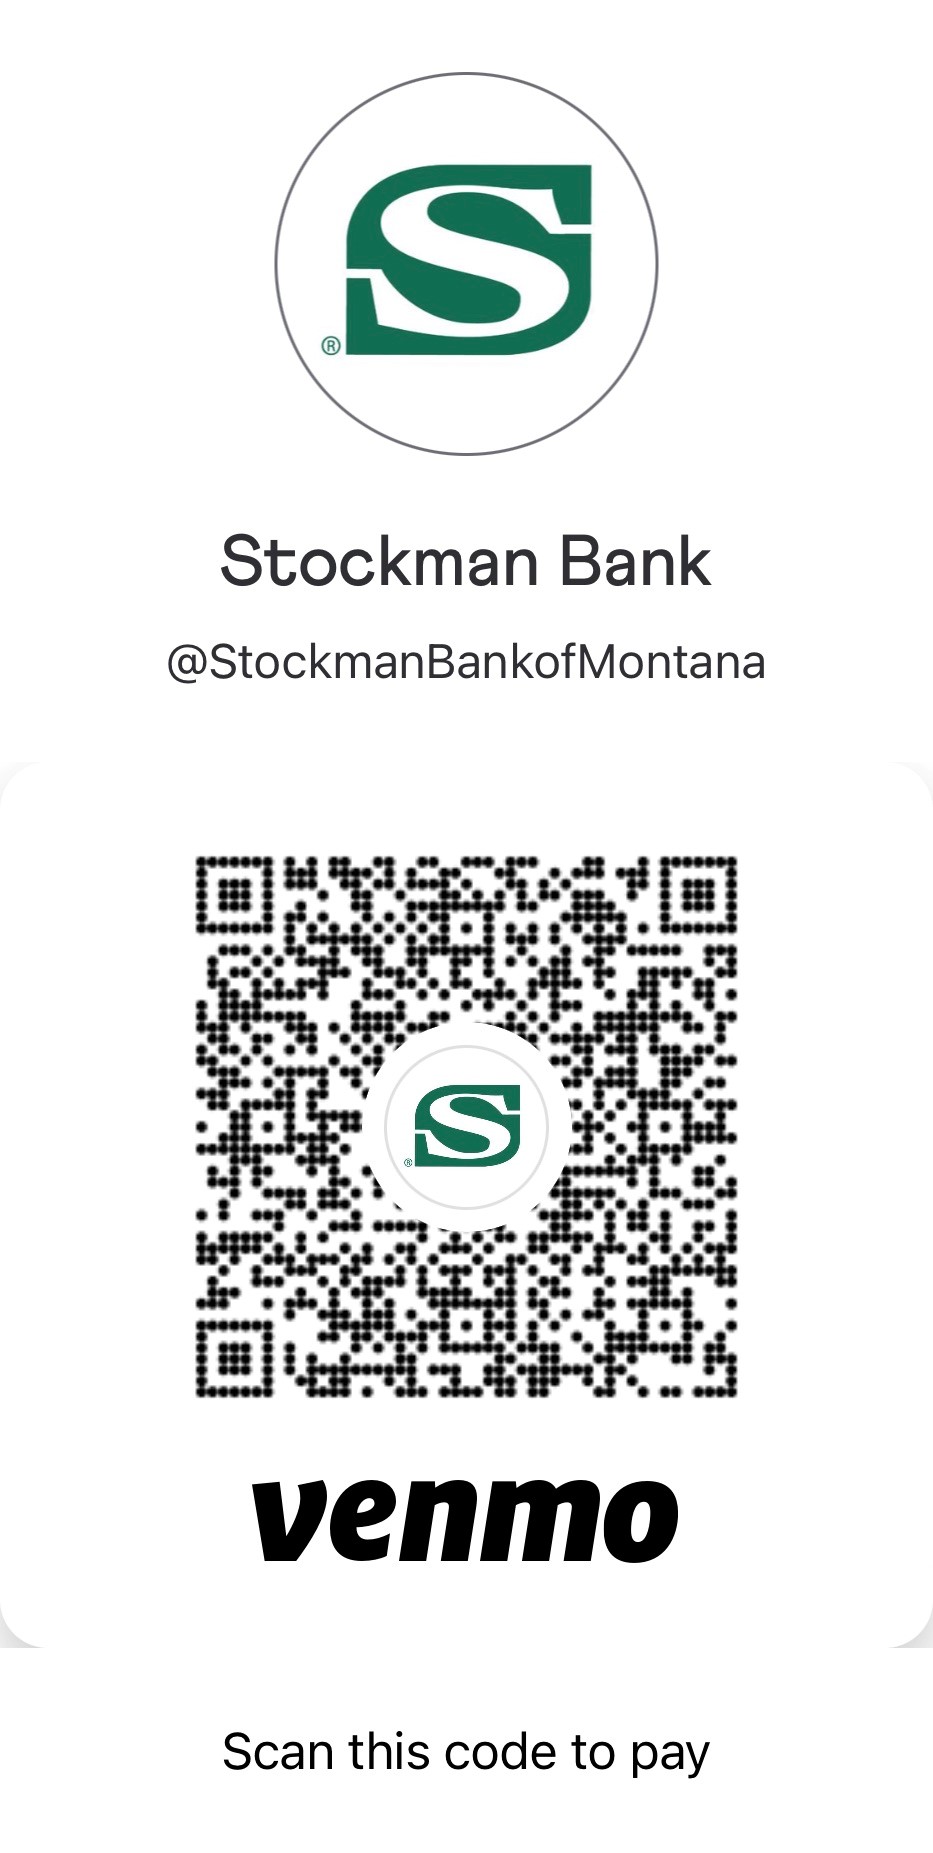 Stockman Bank Venmo QR Code